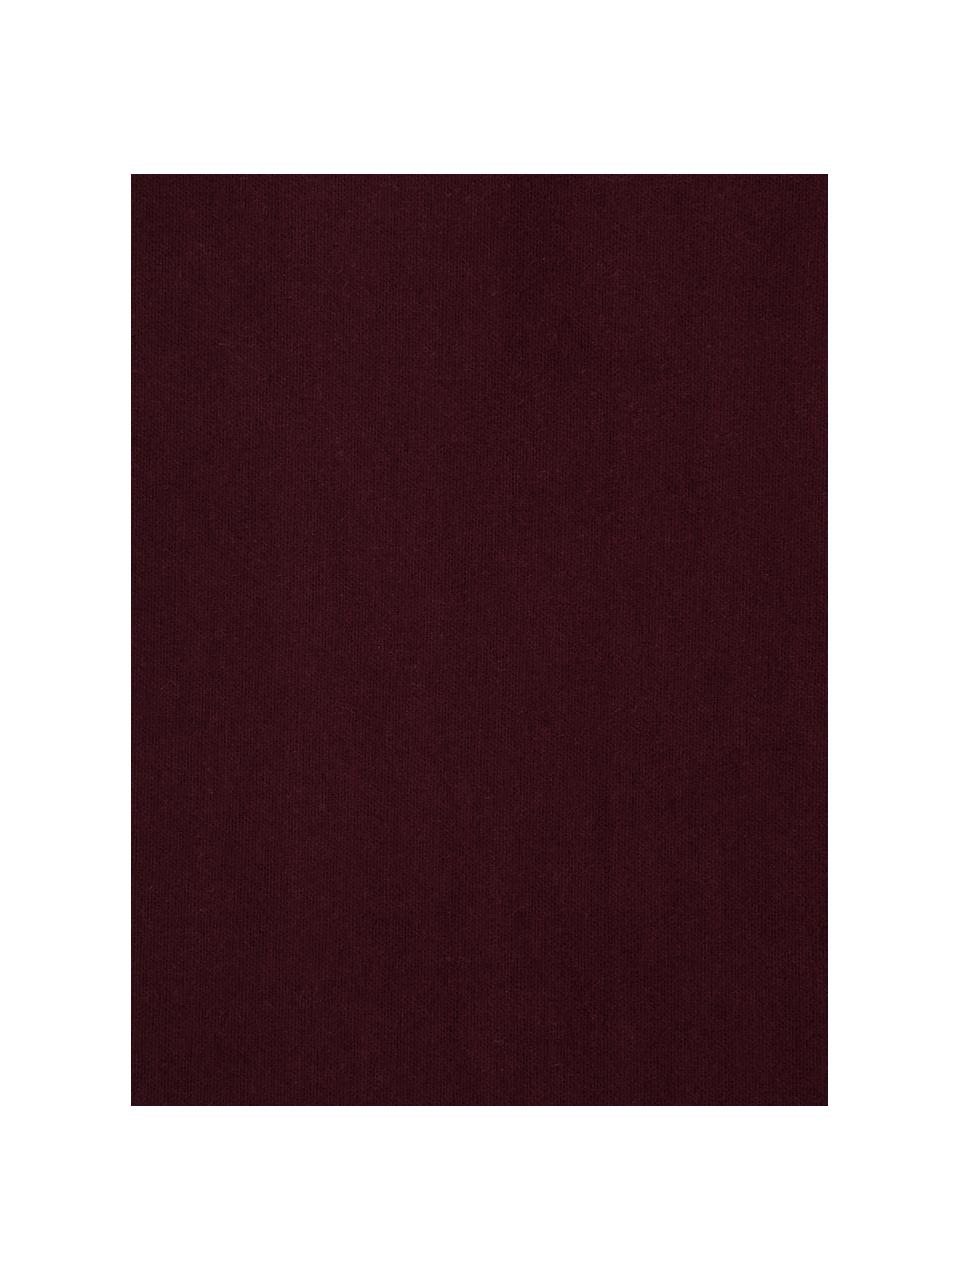 Sábana bajera de franela Erica, Rojo oscuro, Cama 180 cm (180 x 200 cm)